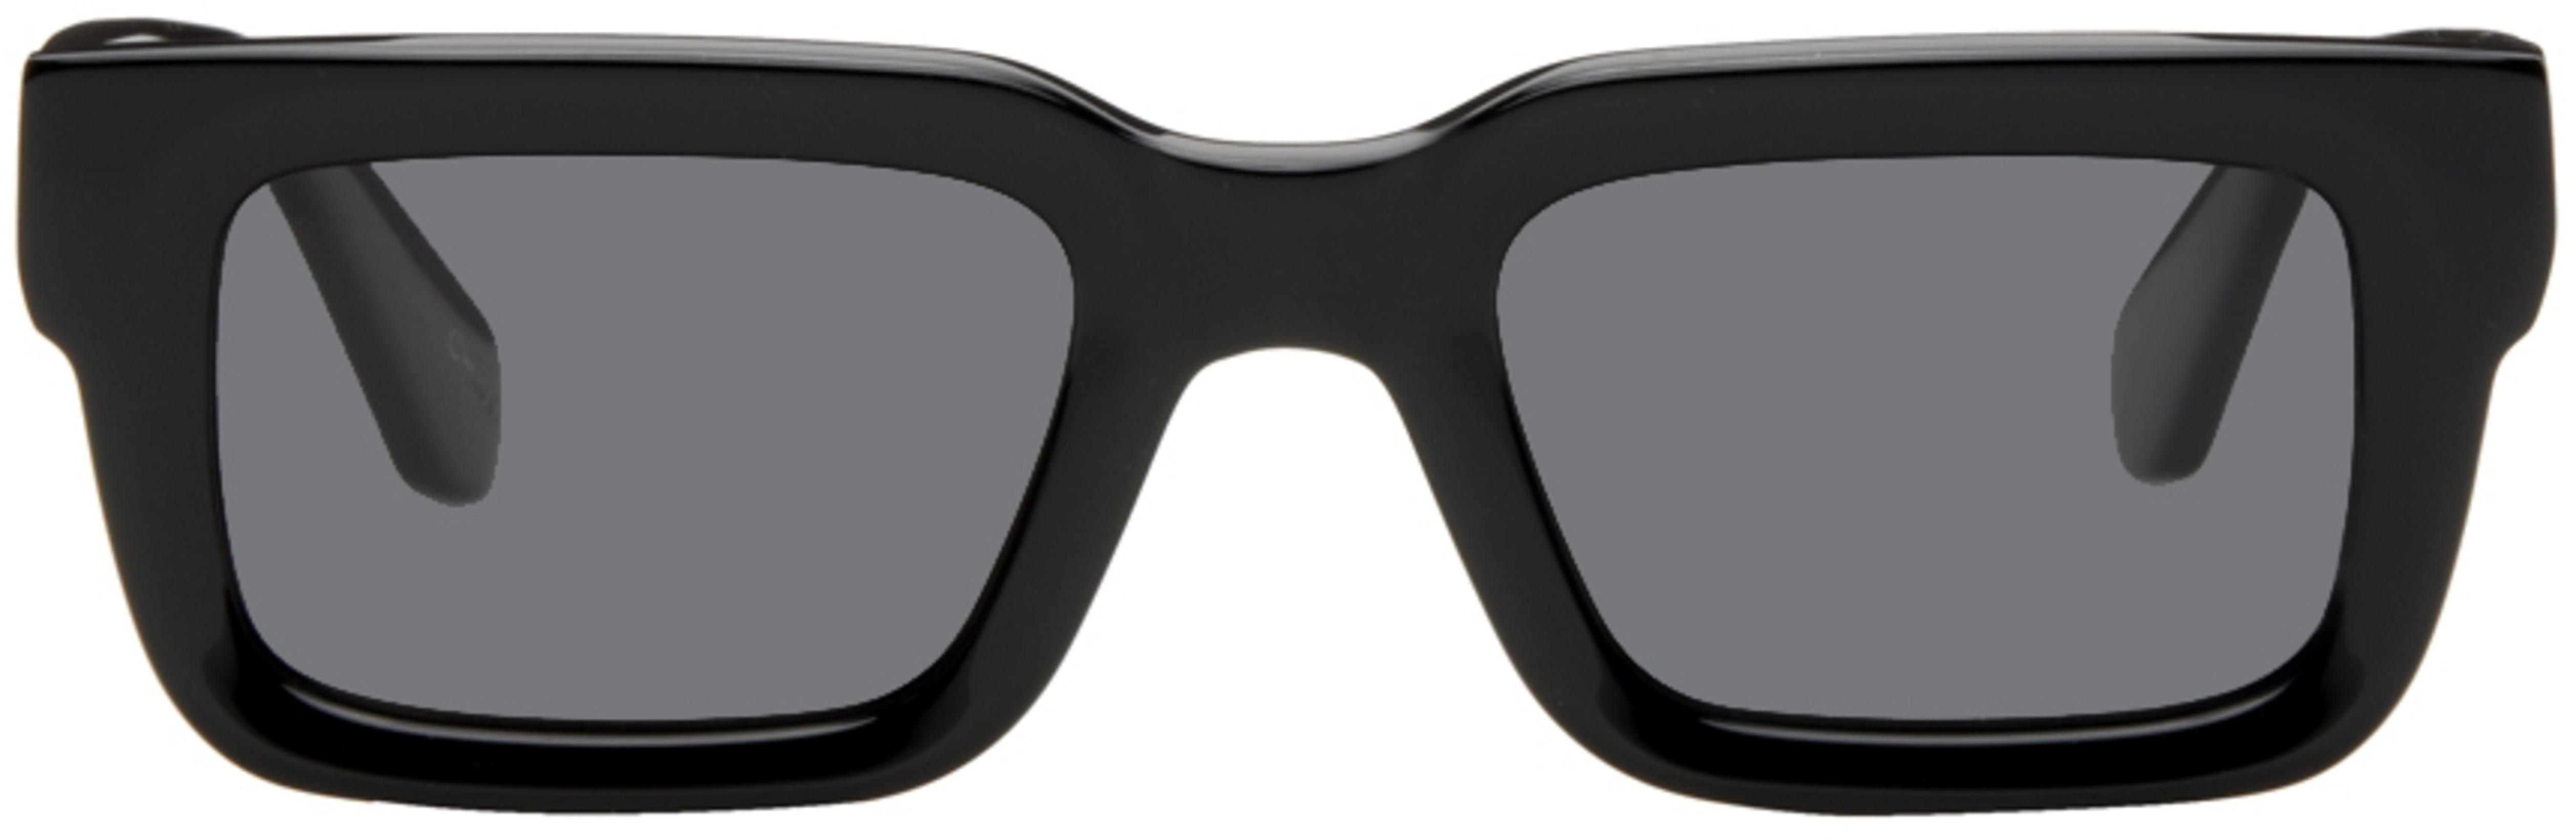 Black 05 Sunglasses by CHIMI